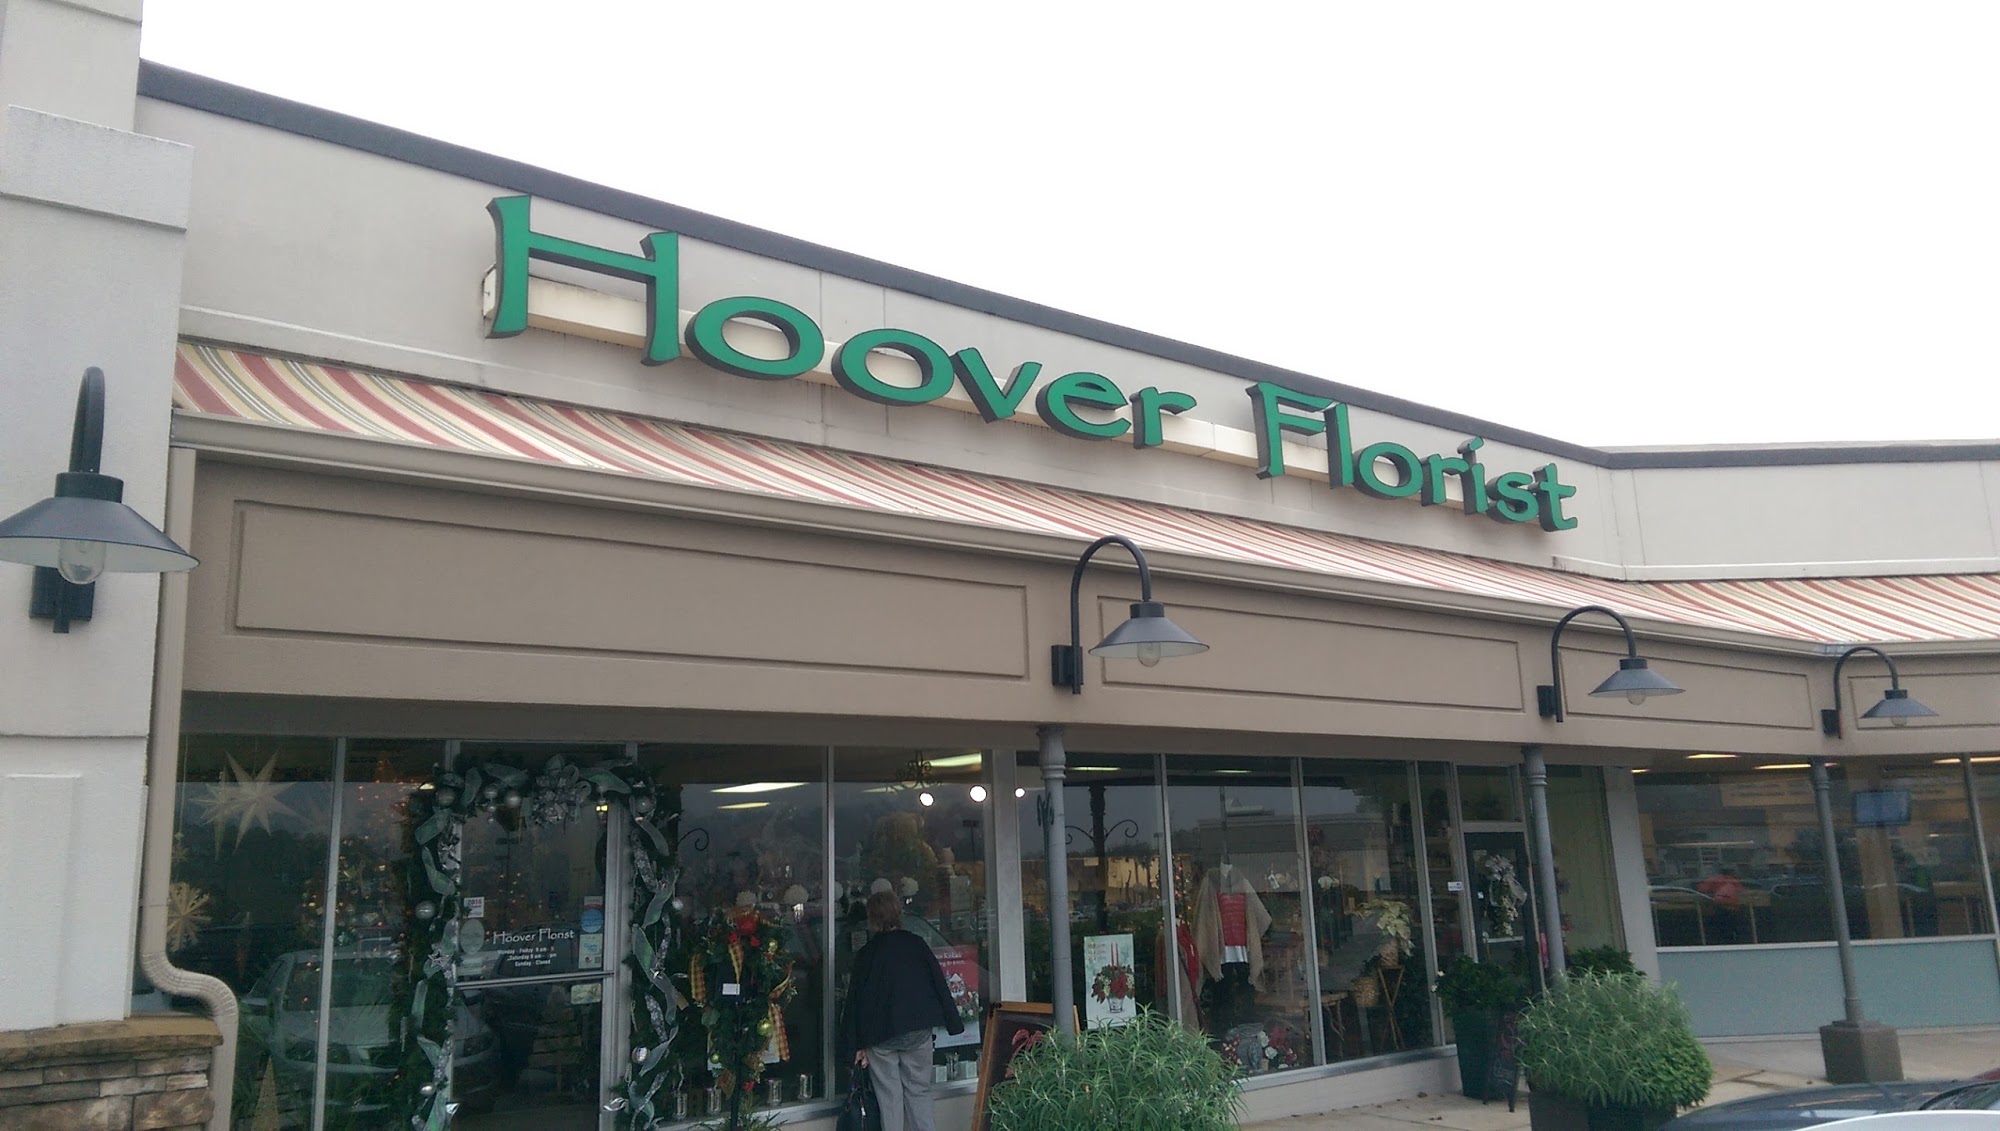 Hoover Florist